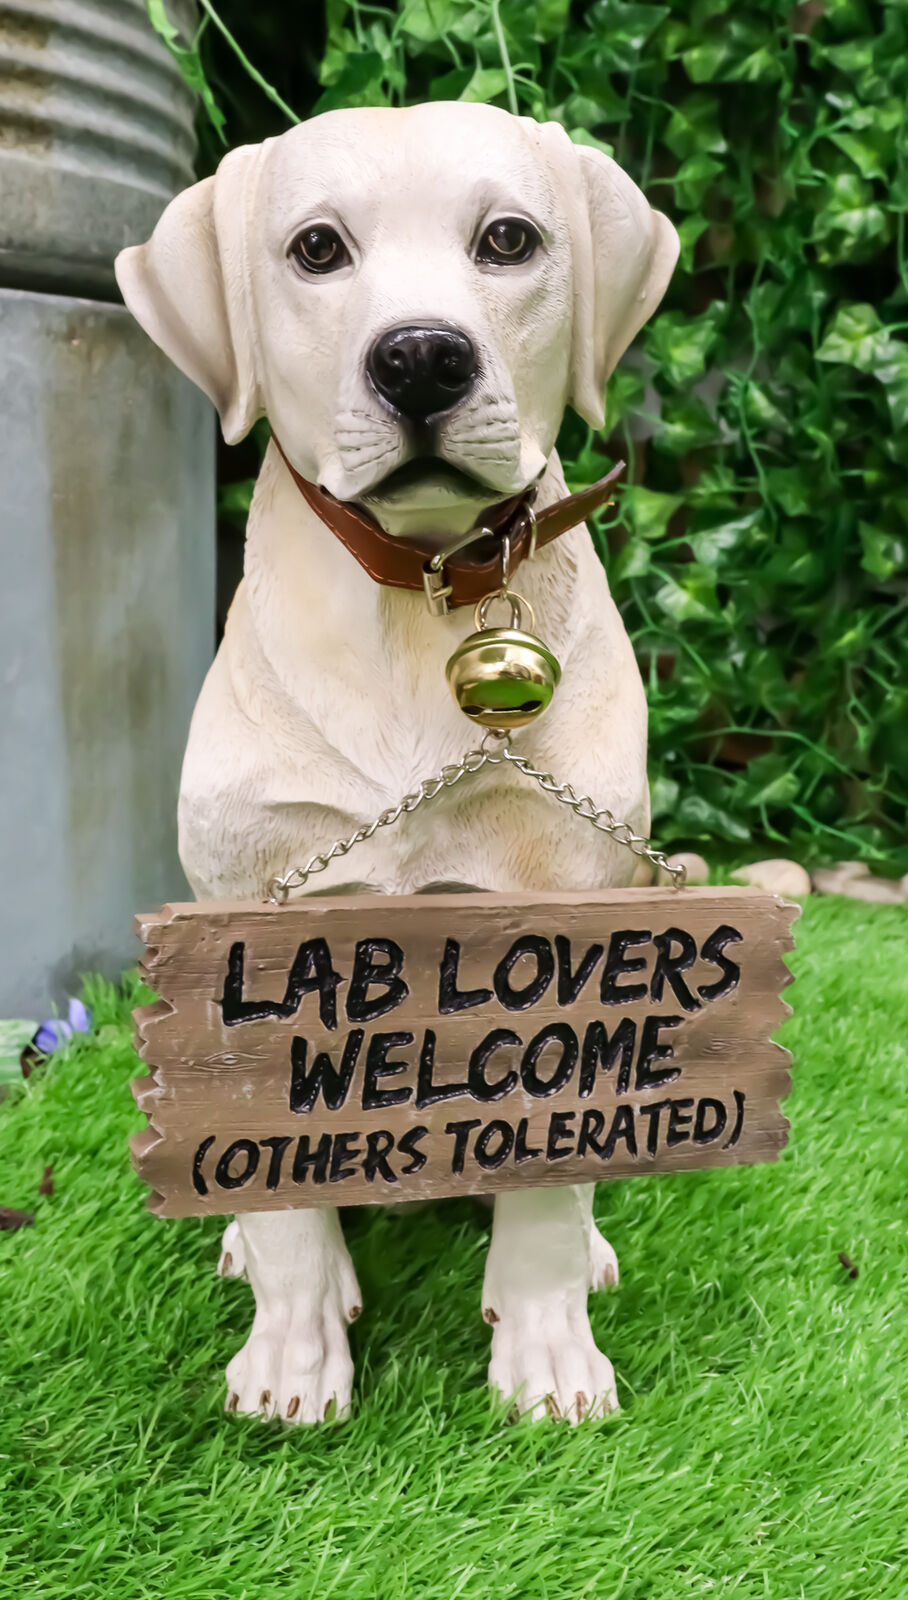 Lifelike Yellow Labrador Retriever Dog With Welcome Jingle Collar Sign Statue